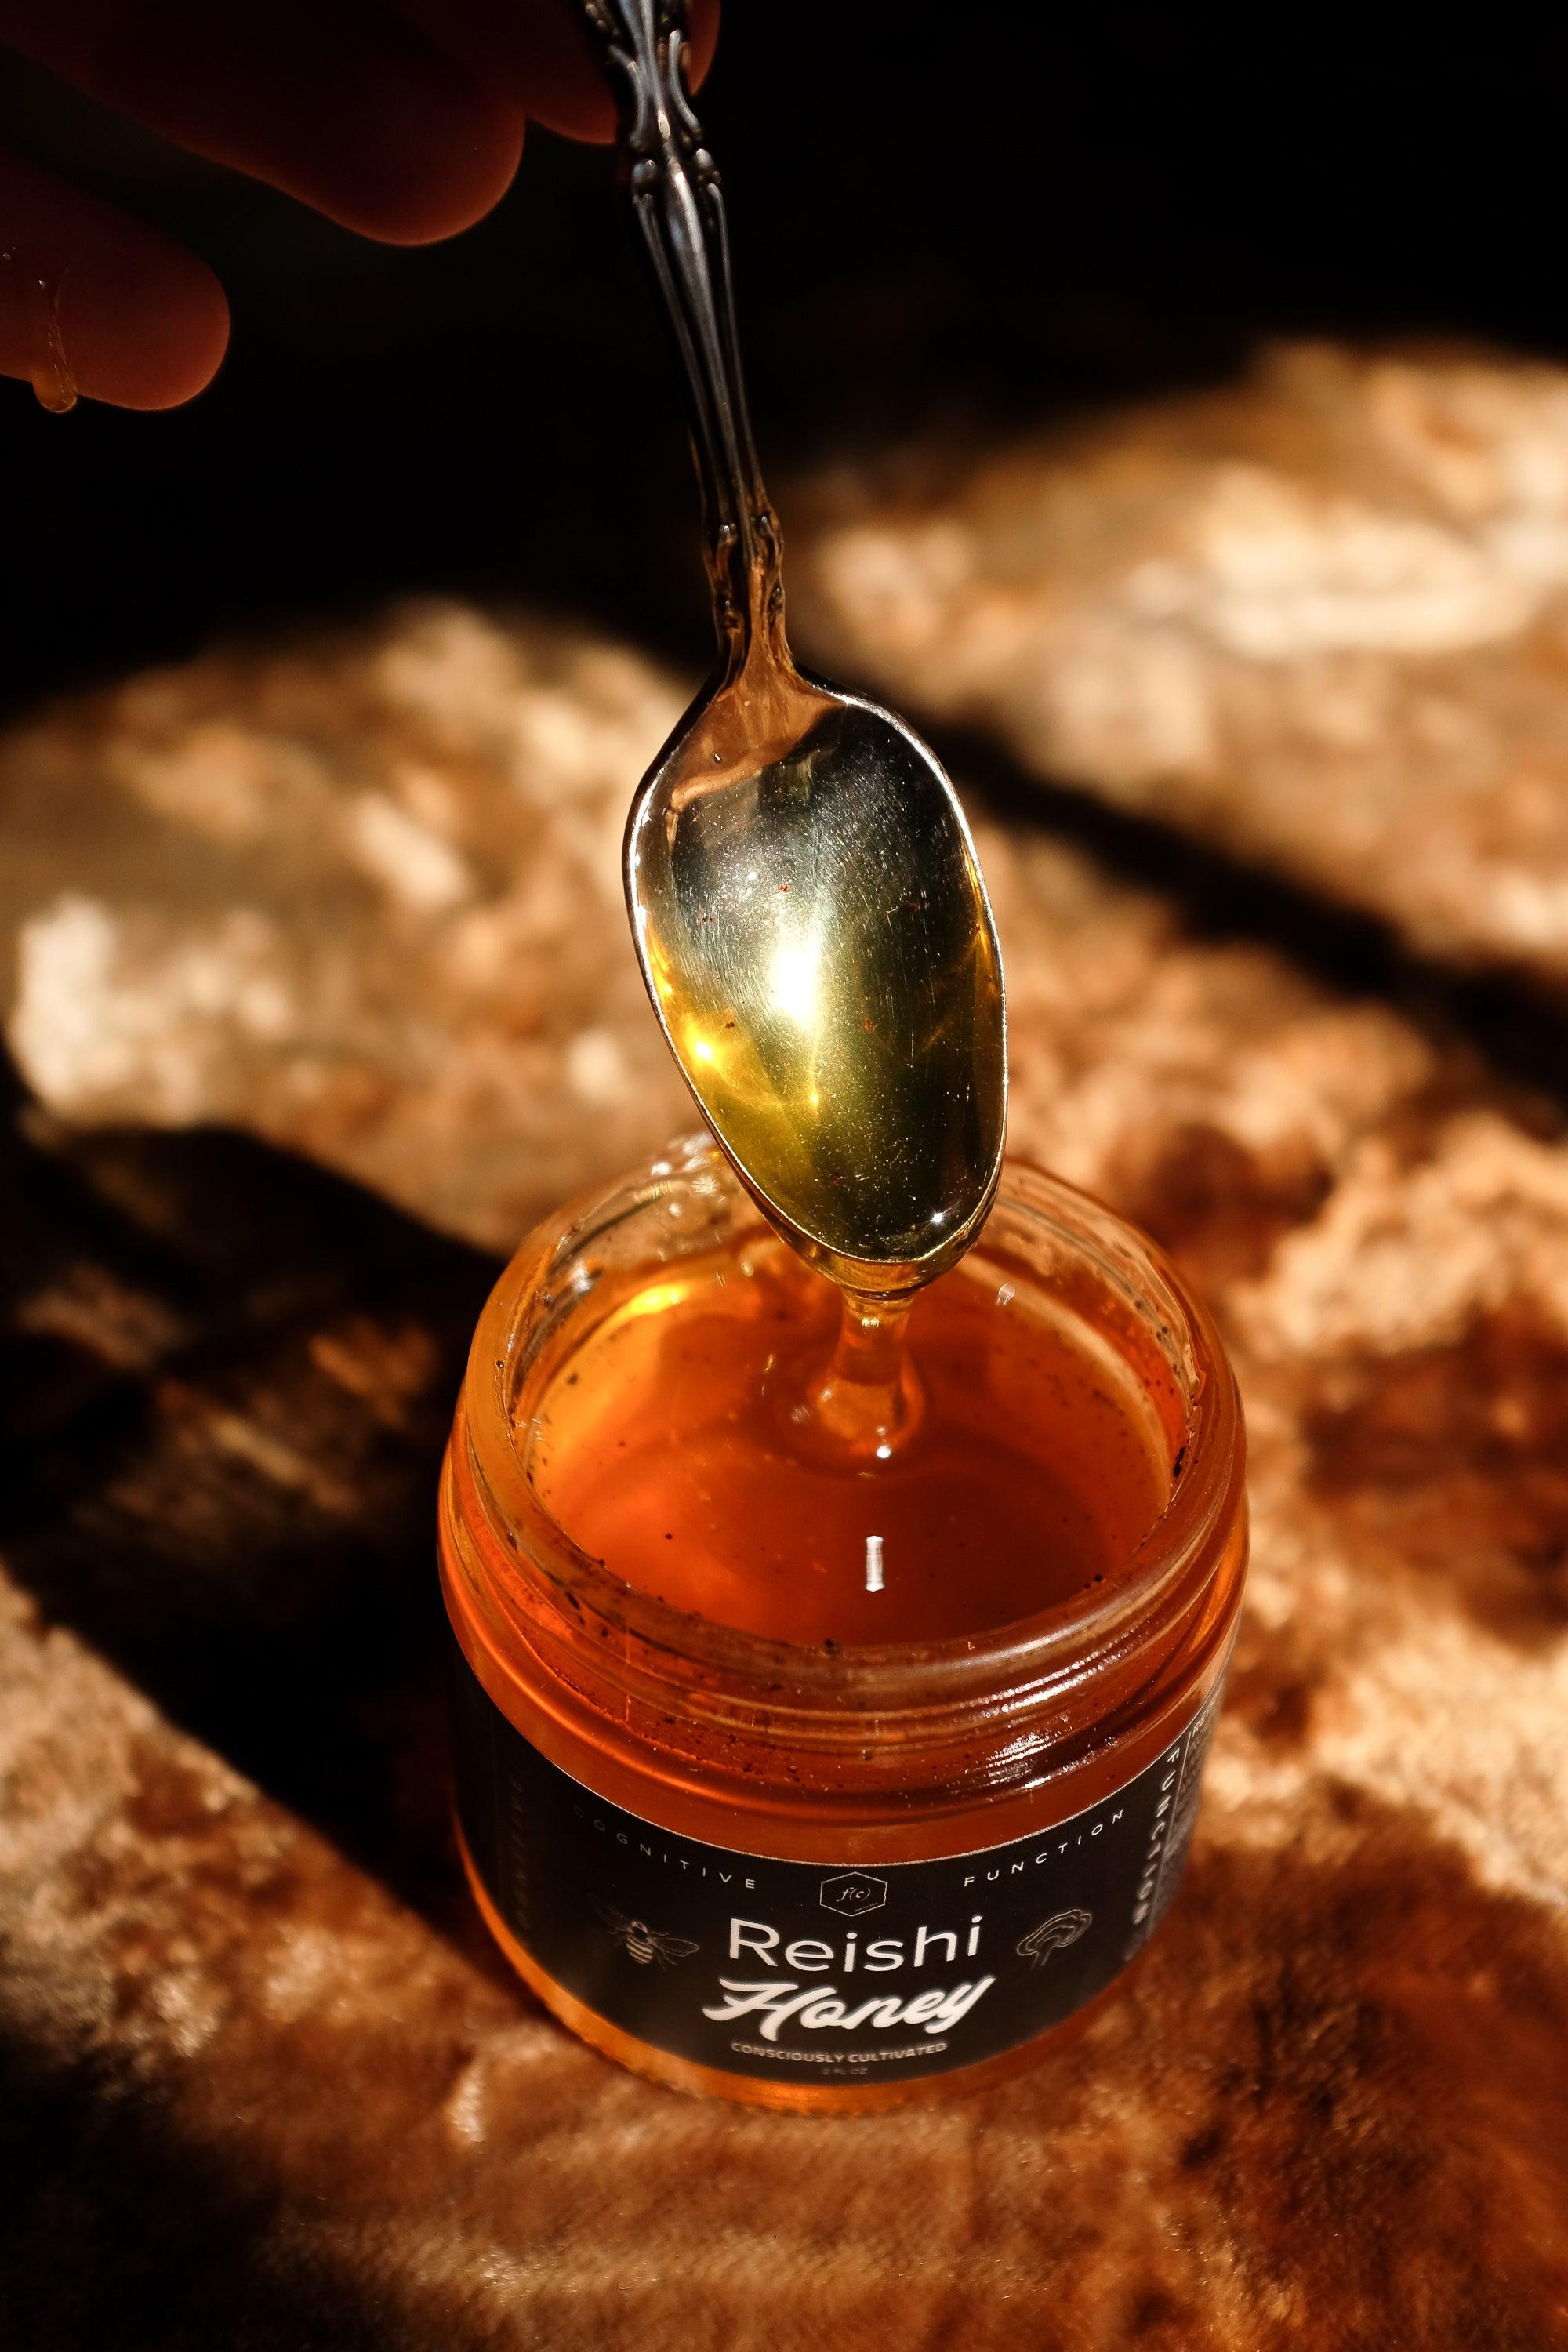 Reishi Honey, Cognitive Function